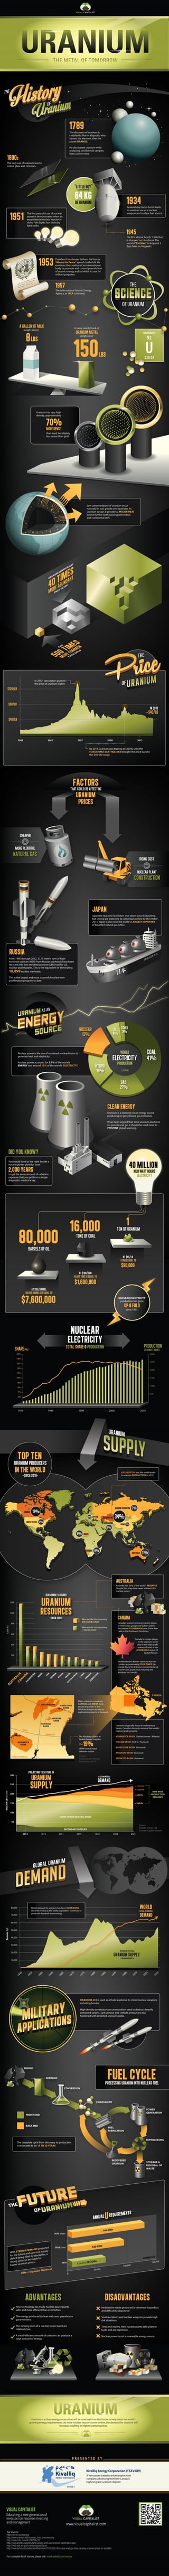 Uranium: The Metal of Tomorrow